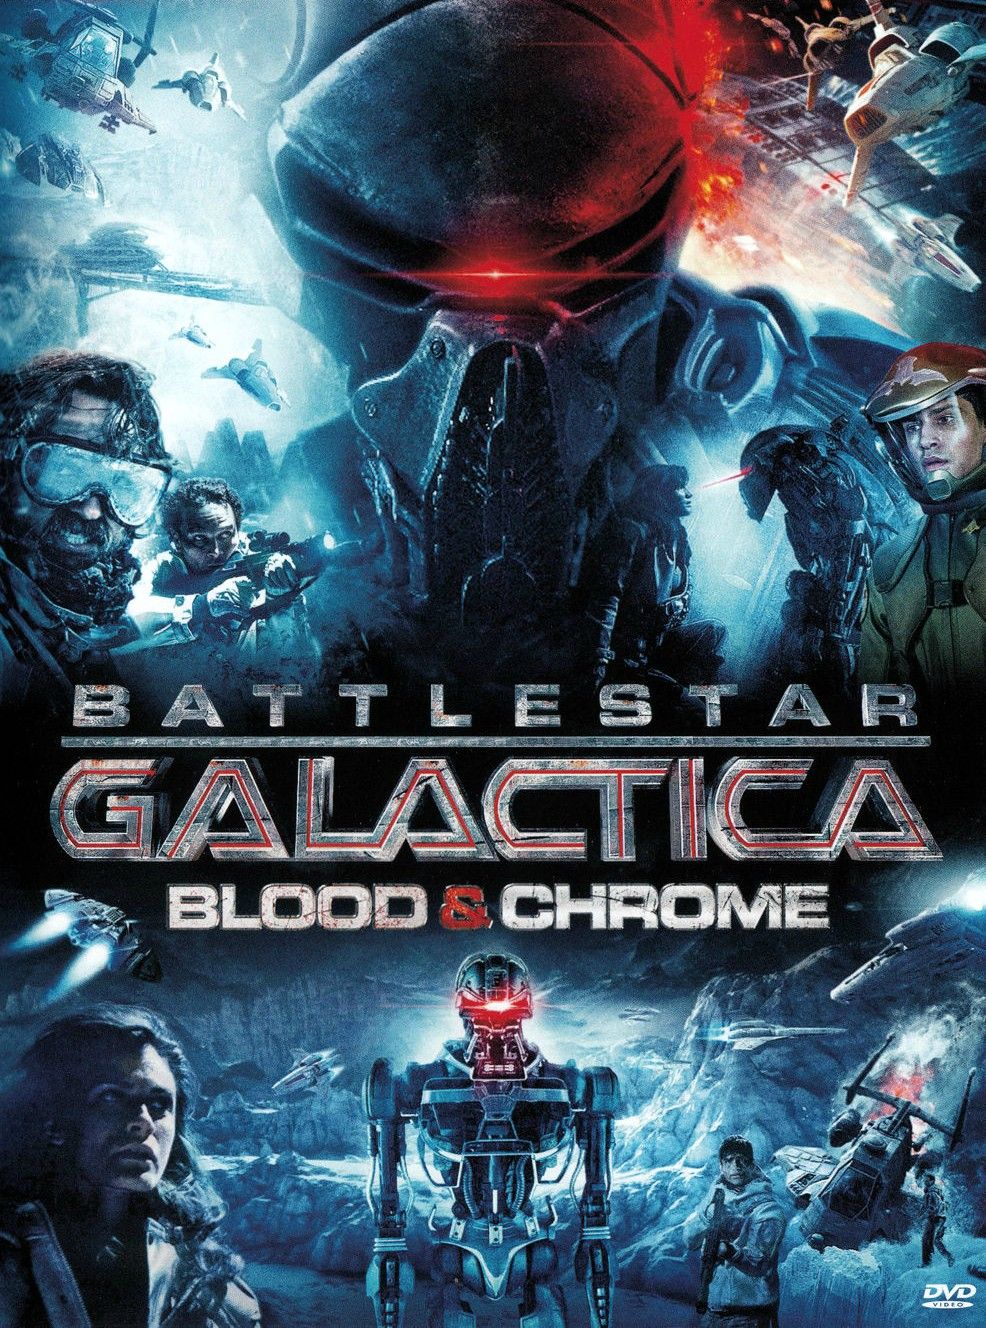 Stiahni si Filmy CZ/SK dabing Vesmirna lod Galactica / Krev a chrom:Battlestar Galactica/ Blood and Chrome (2012)[TvRip](CZ) = CSFD 72%